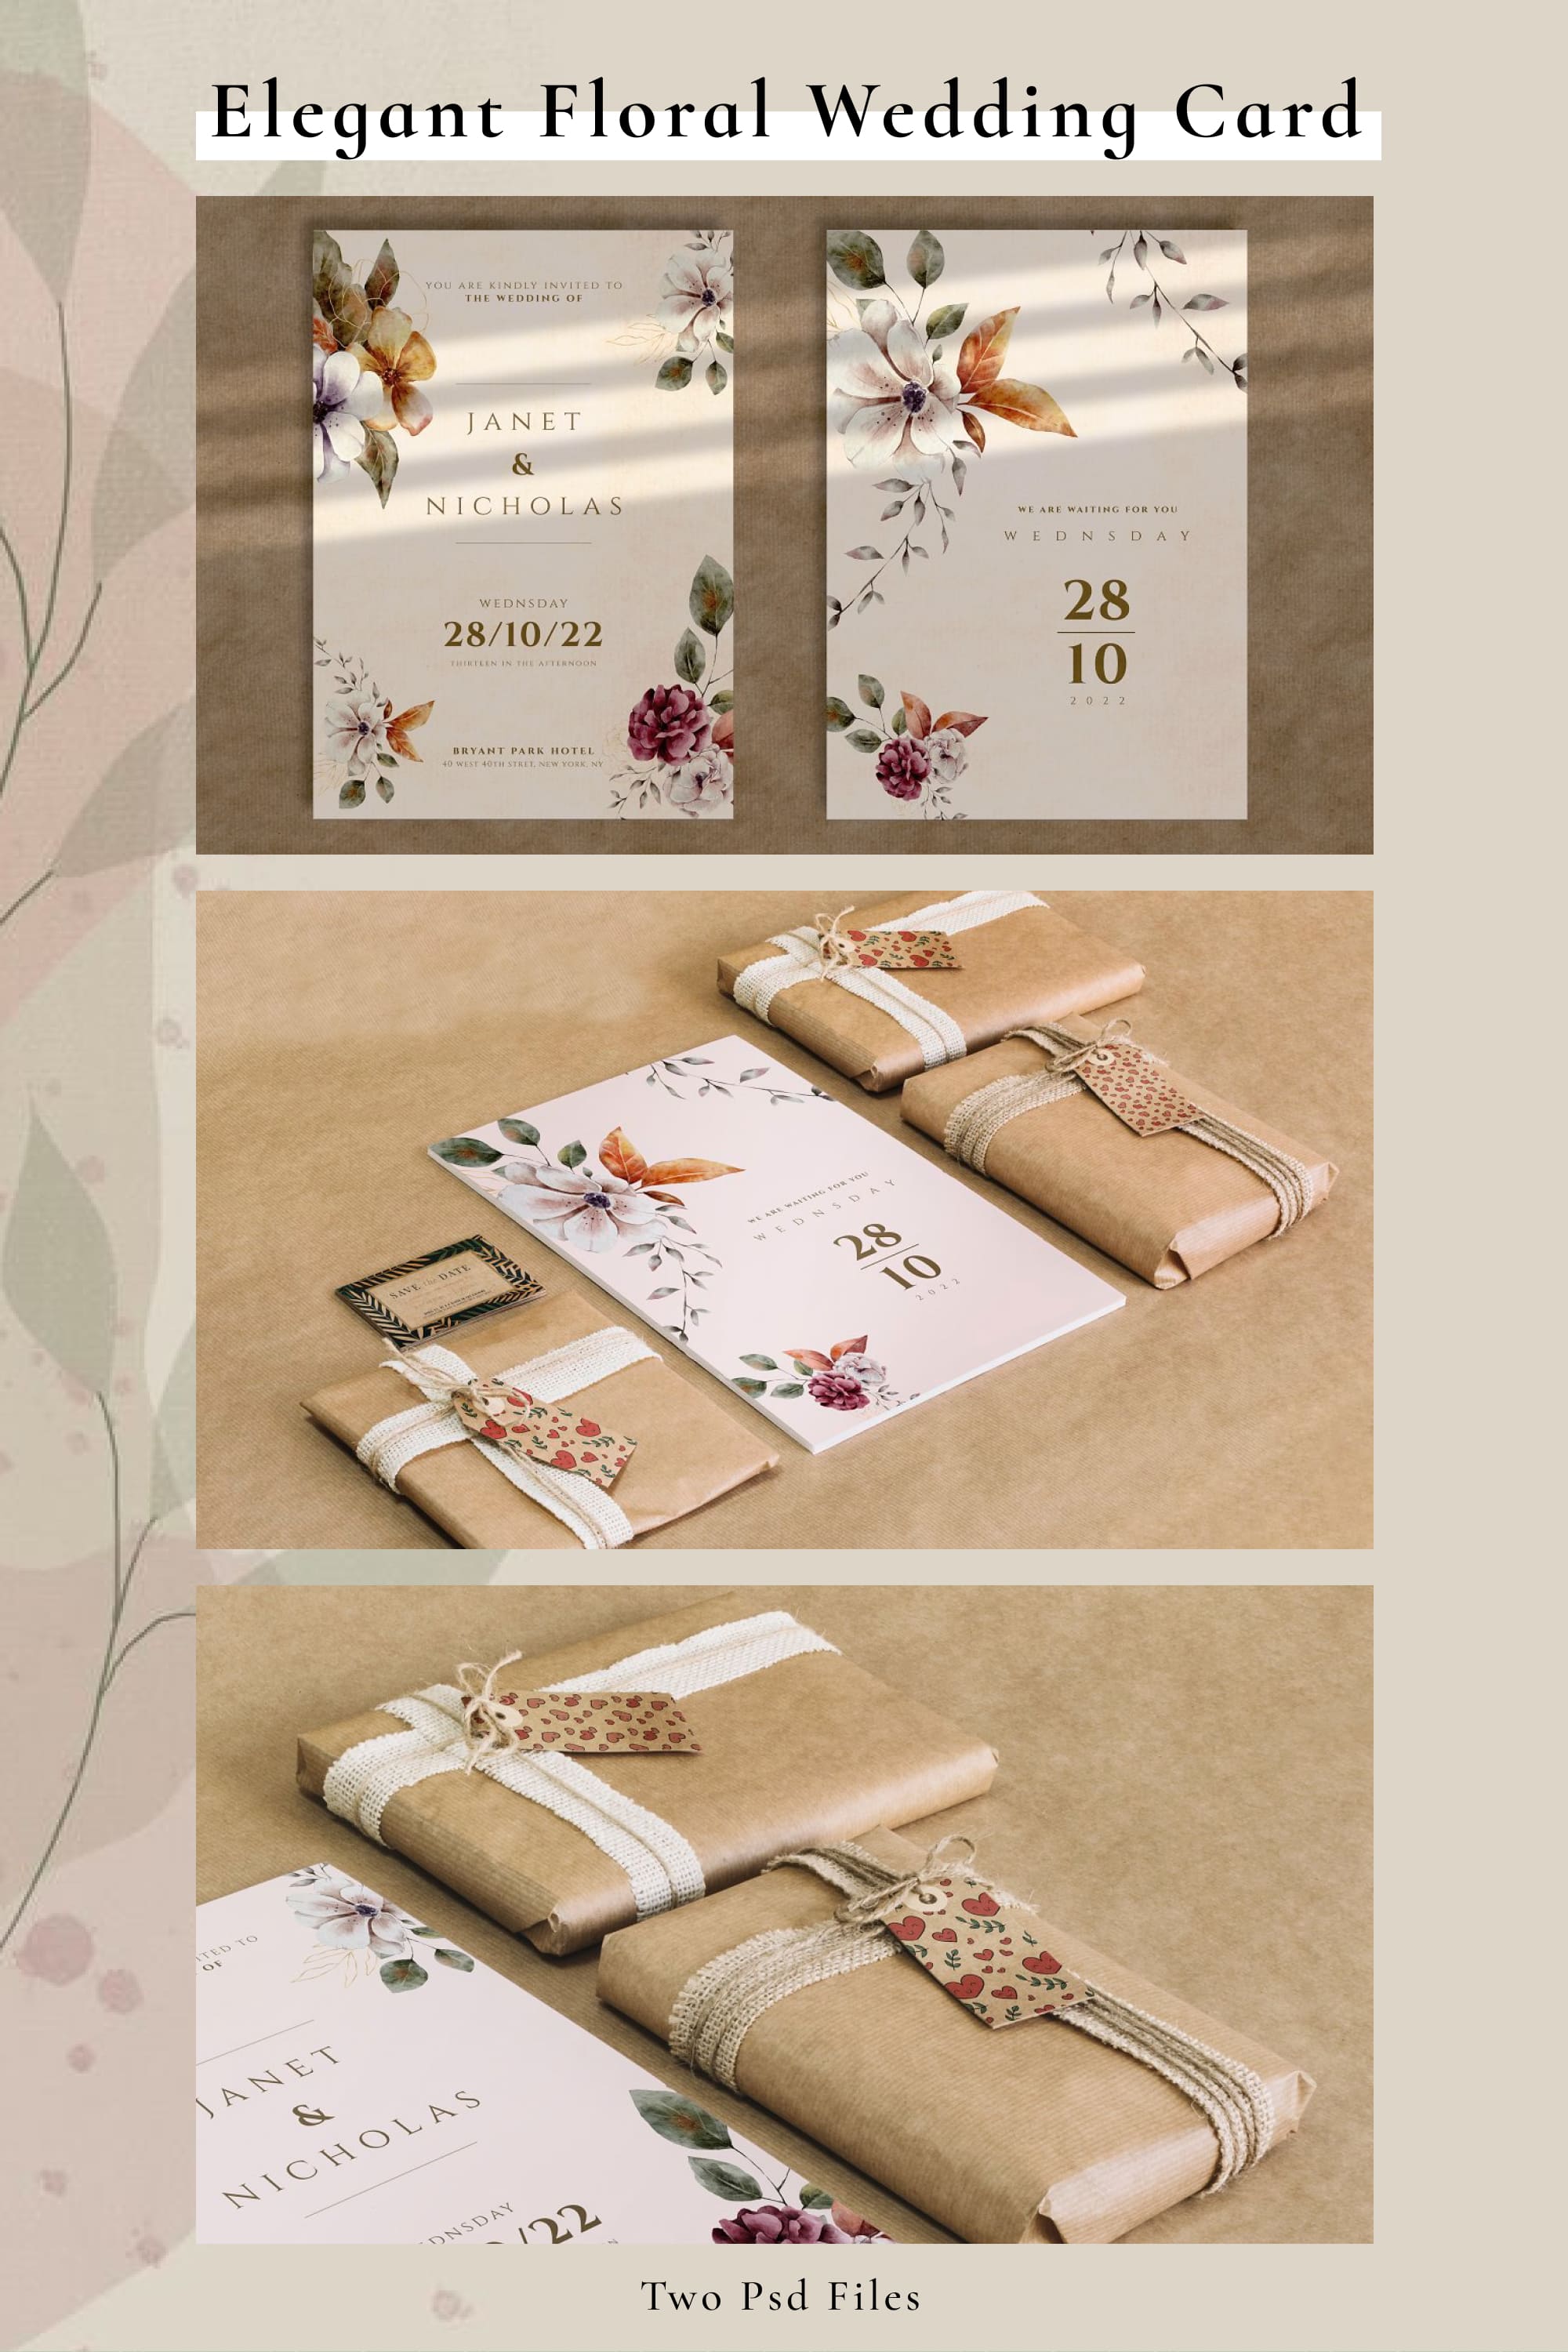 Elegant Floral Wedding Card Pinterest.